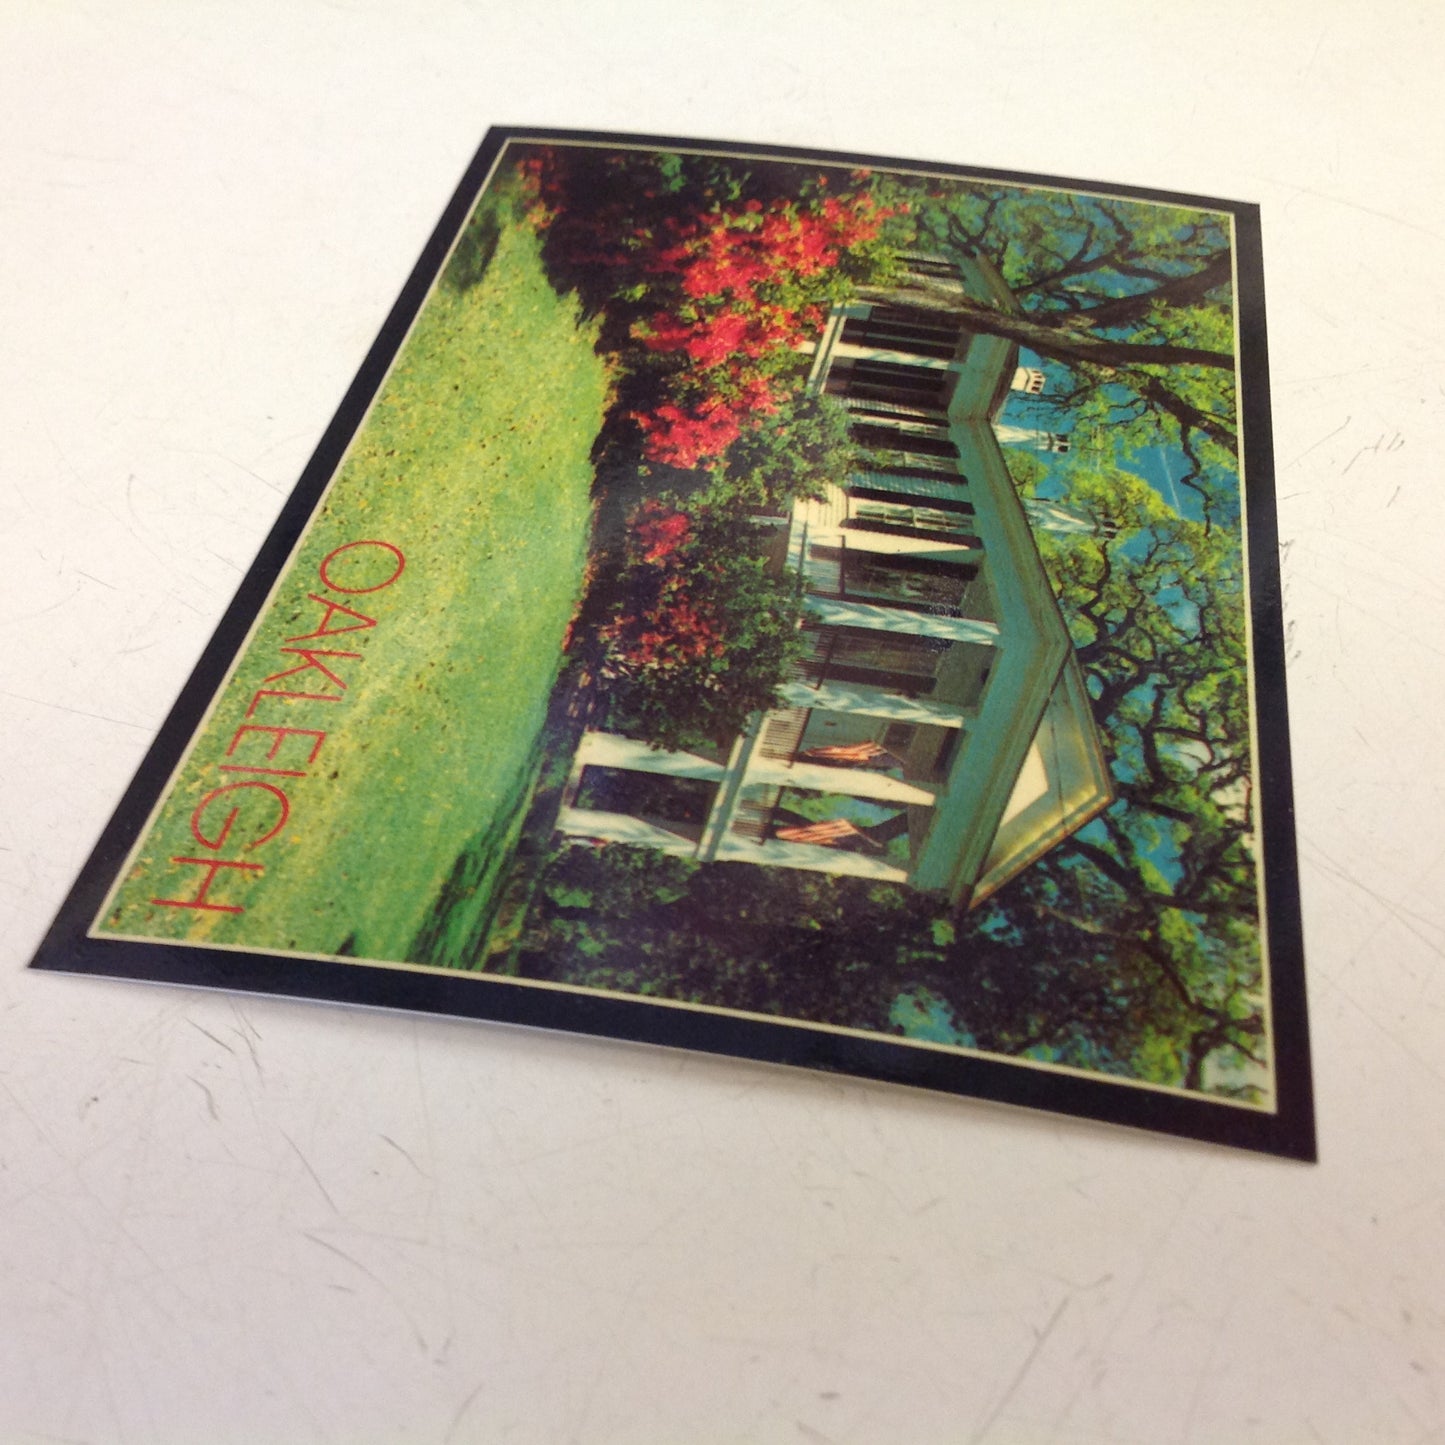 Vintage Dexter Supreme Color Postcard Oakleigh Home Mobile Alabama